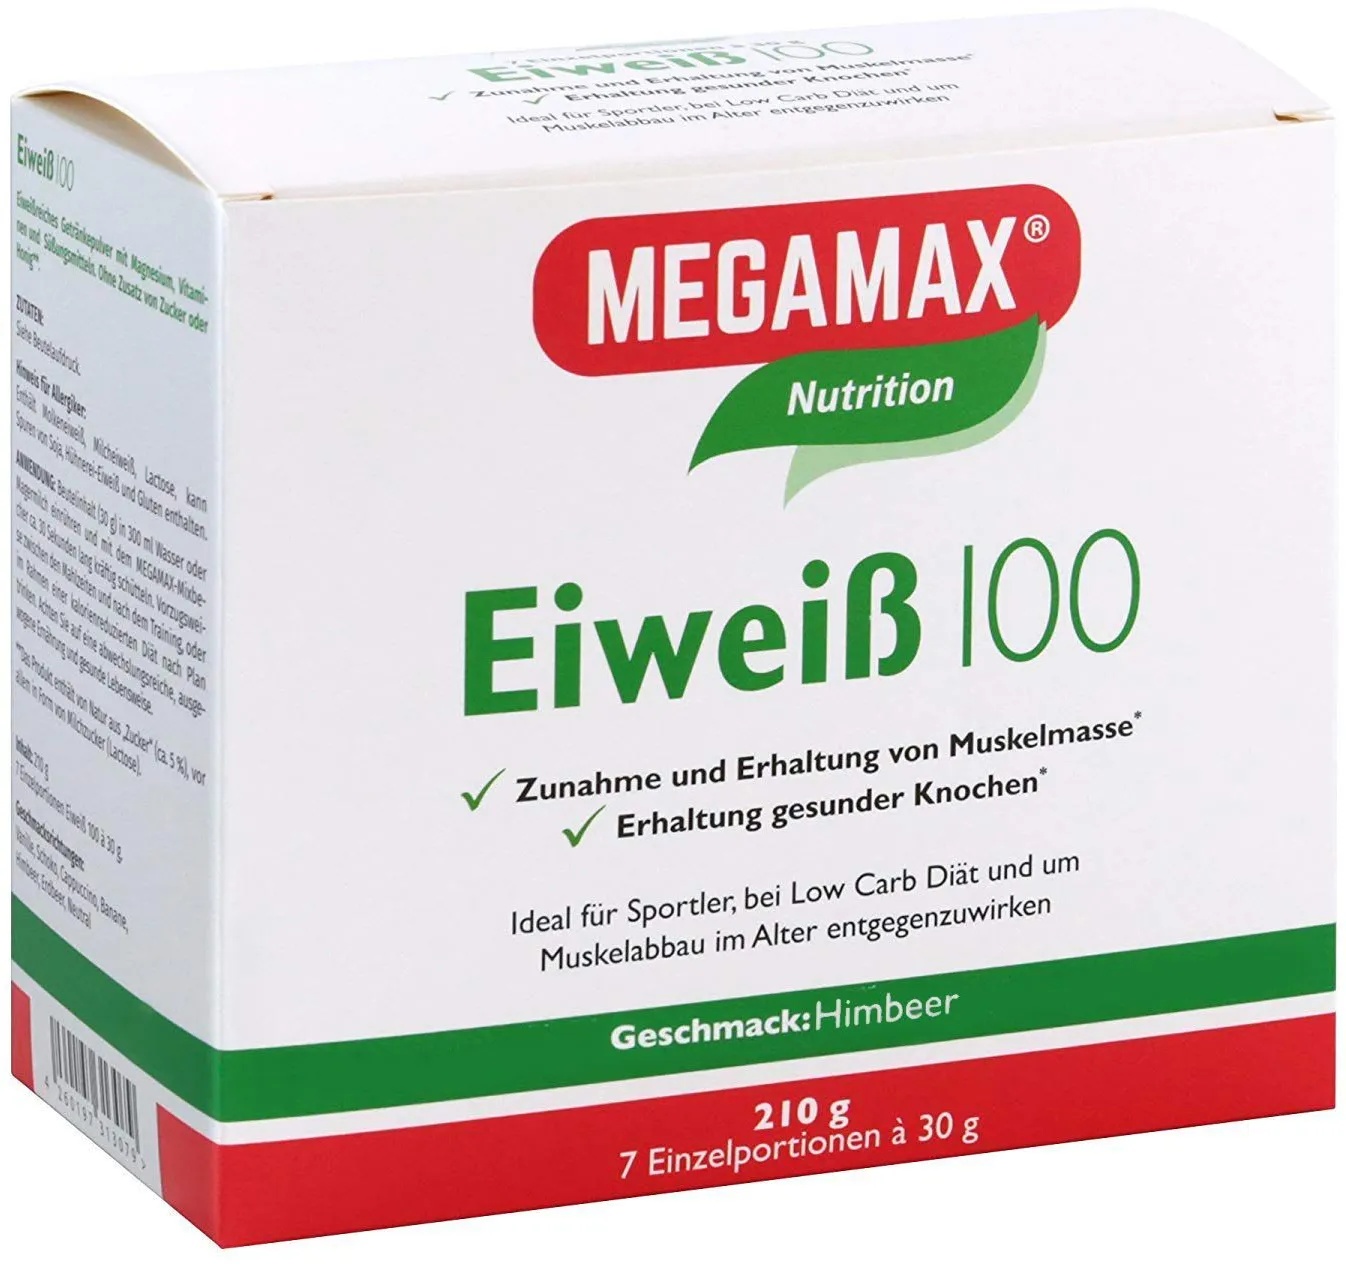 Megamax Eiweiß 100 Himbeer-Geschmack